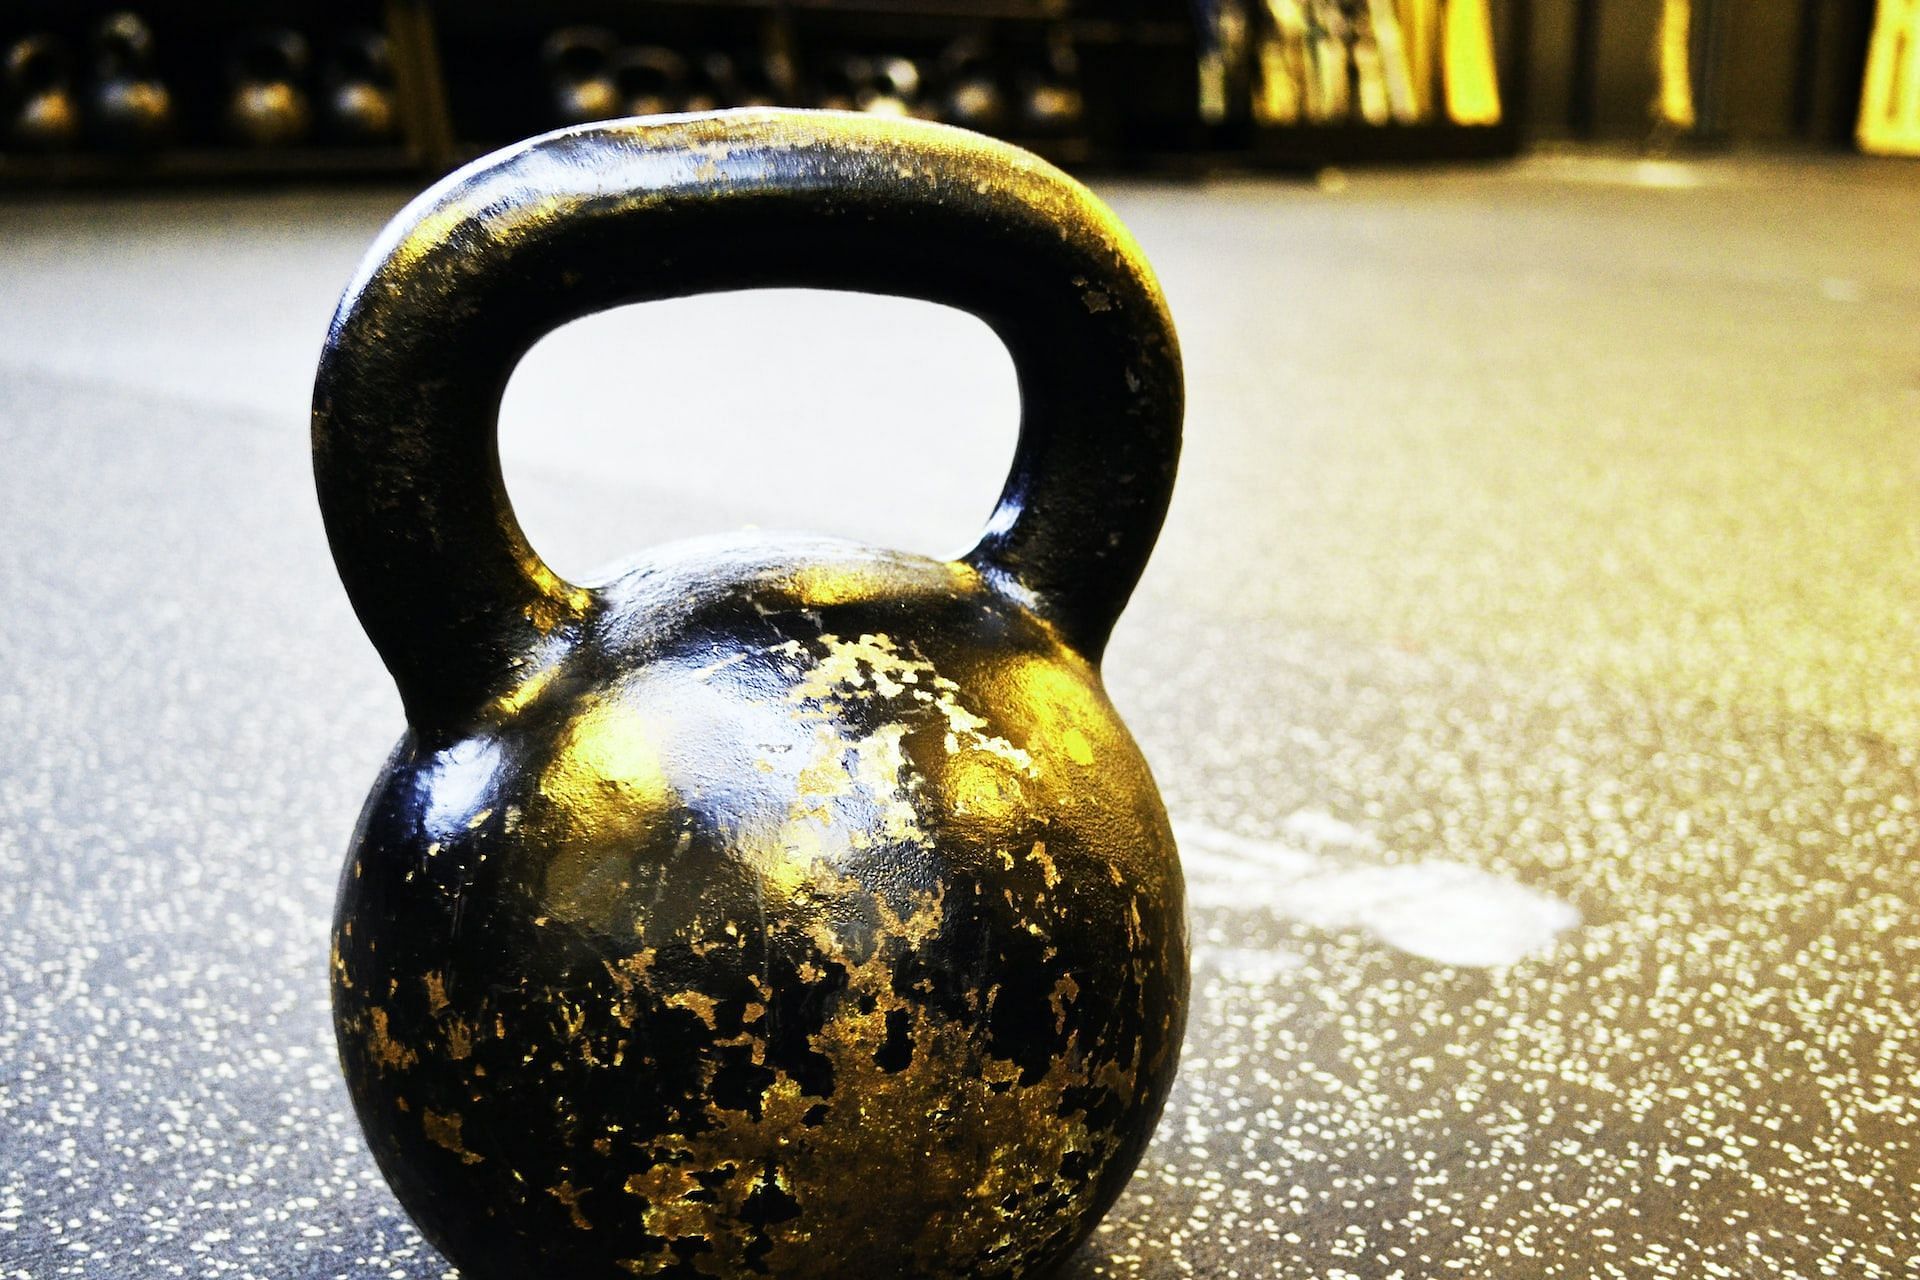 Kettlebell workouts improve muscle strength. (Photo via Unsplash/Jesper Aggergaard)